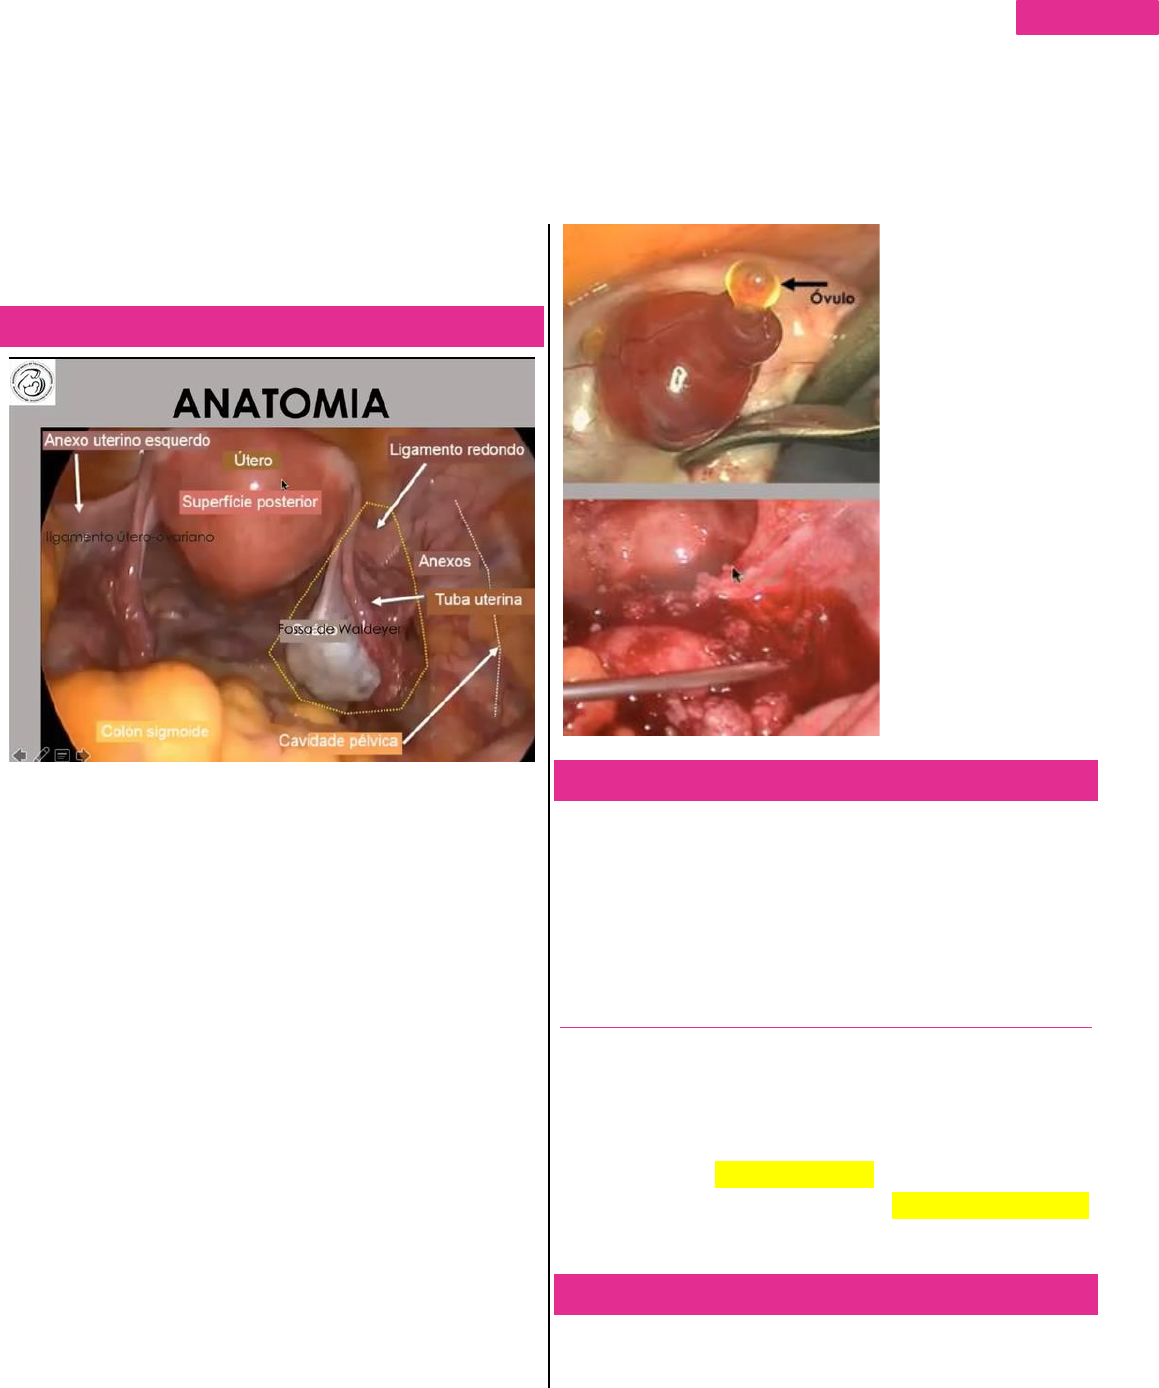 Ooforectomia laparoscópica para massa ovariana sólida